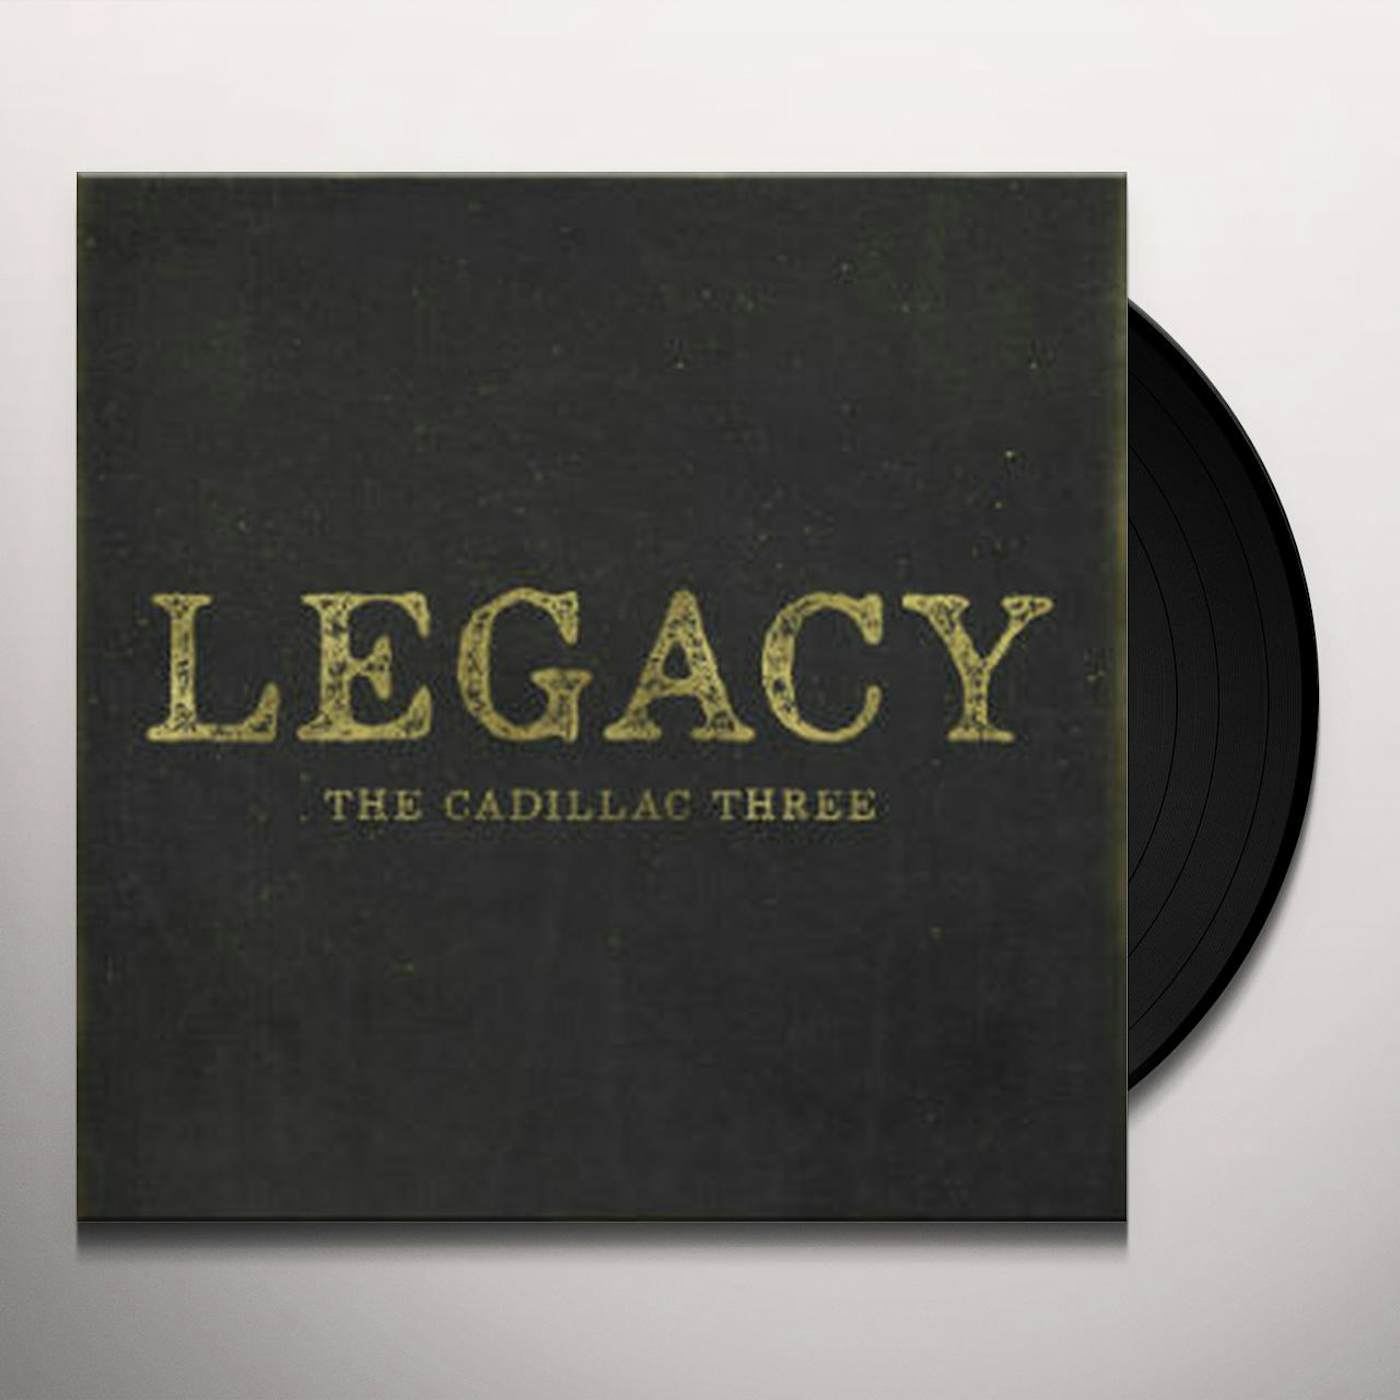 The Cadillac Three LEGACY (LP) Vinyl Record